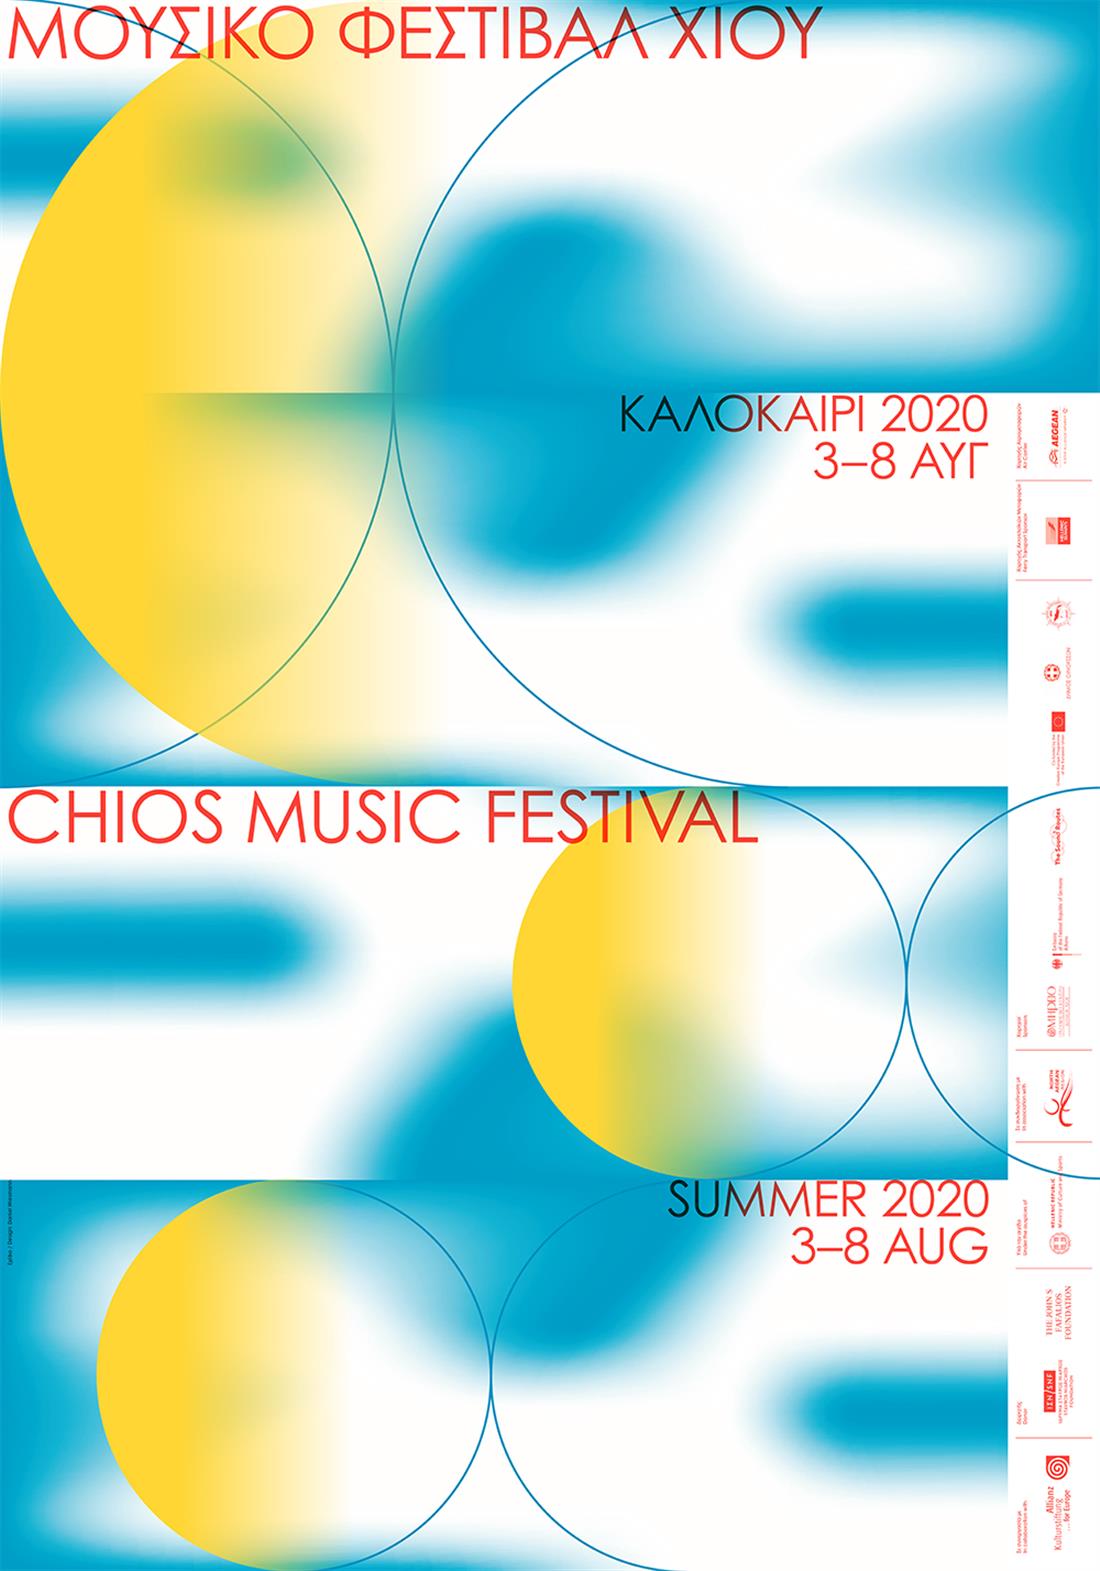 Chios Music Festival - Μουσικο? Φεστιβα?λ Χι?ου